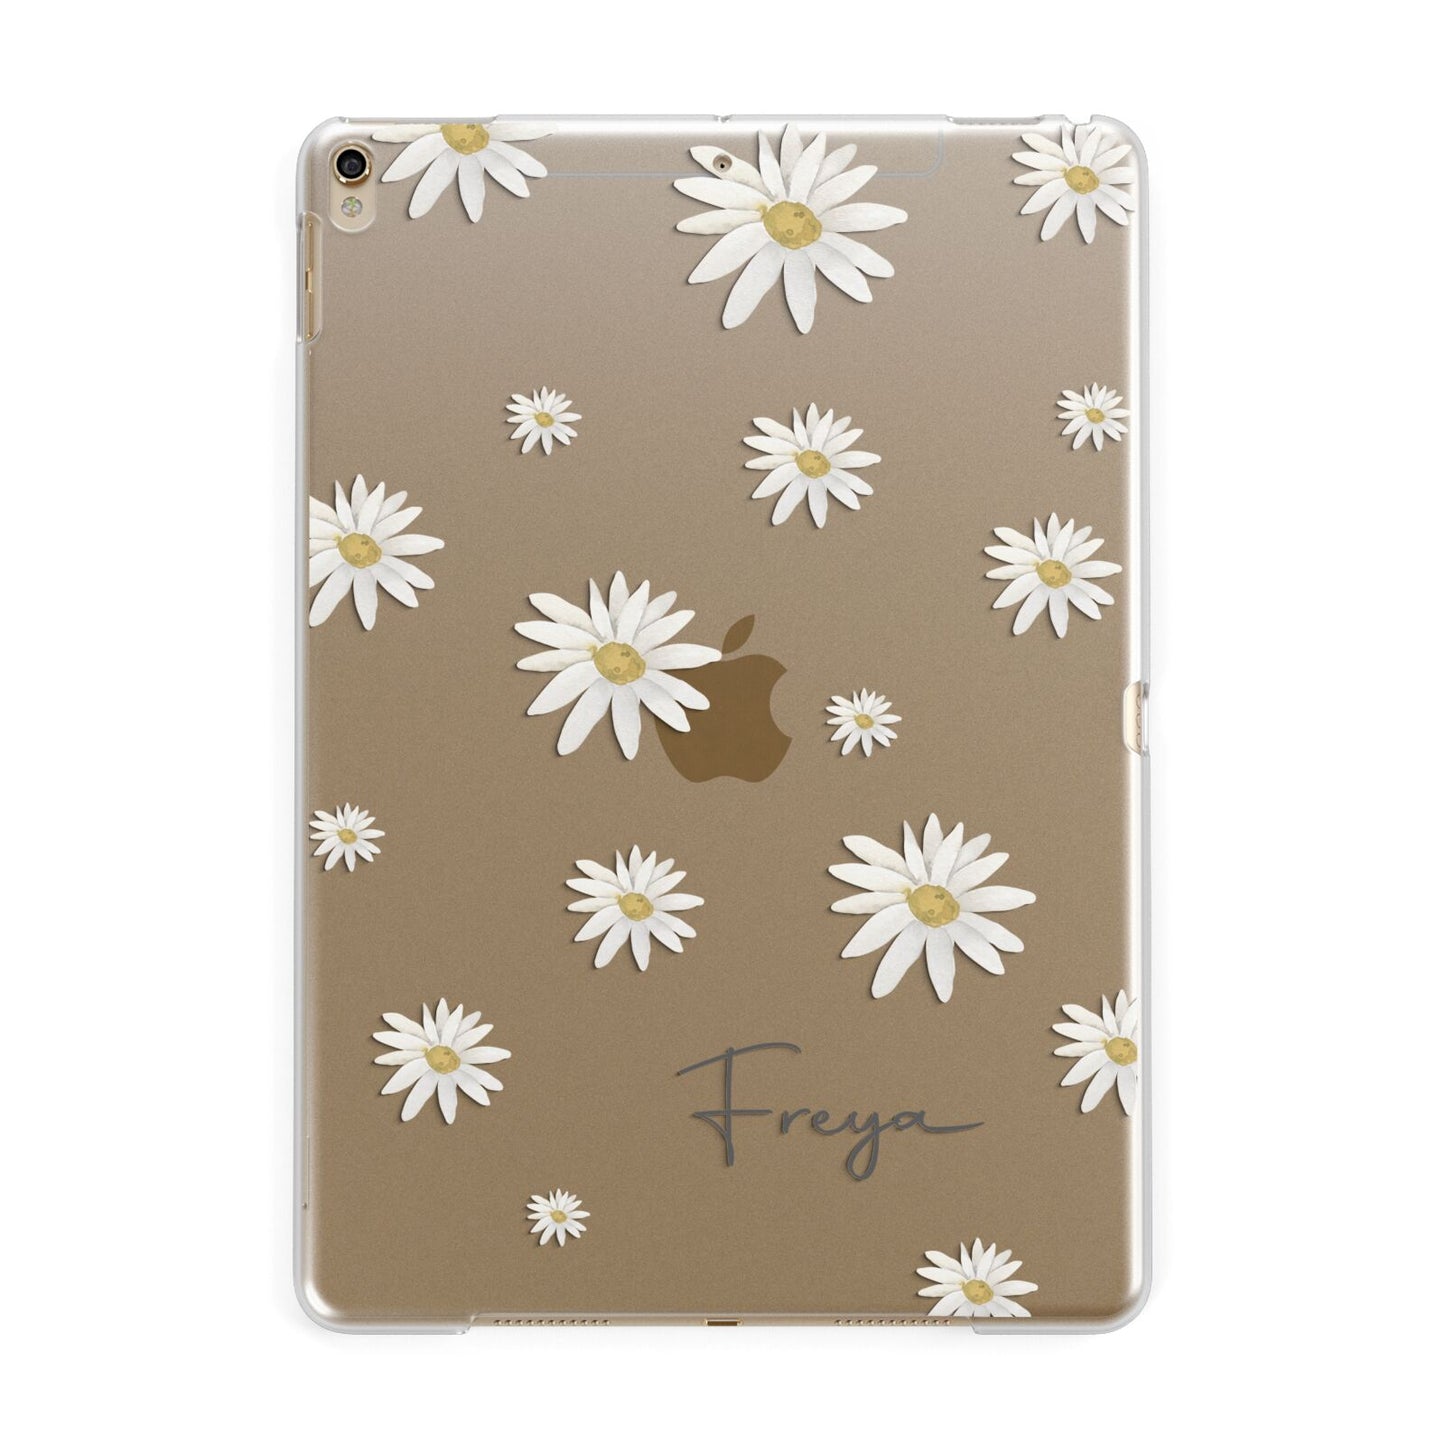 Personalised Vintage Daisy Apple iPad Gold Case